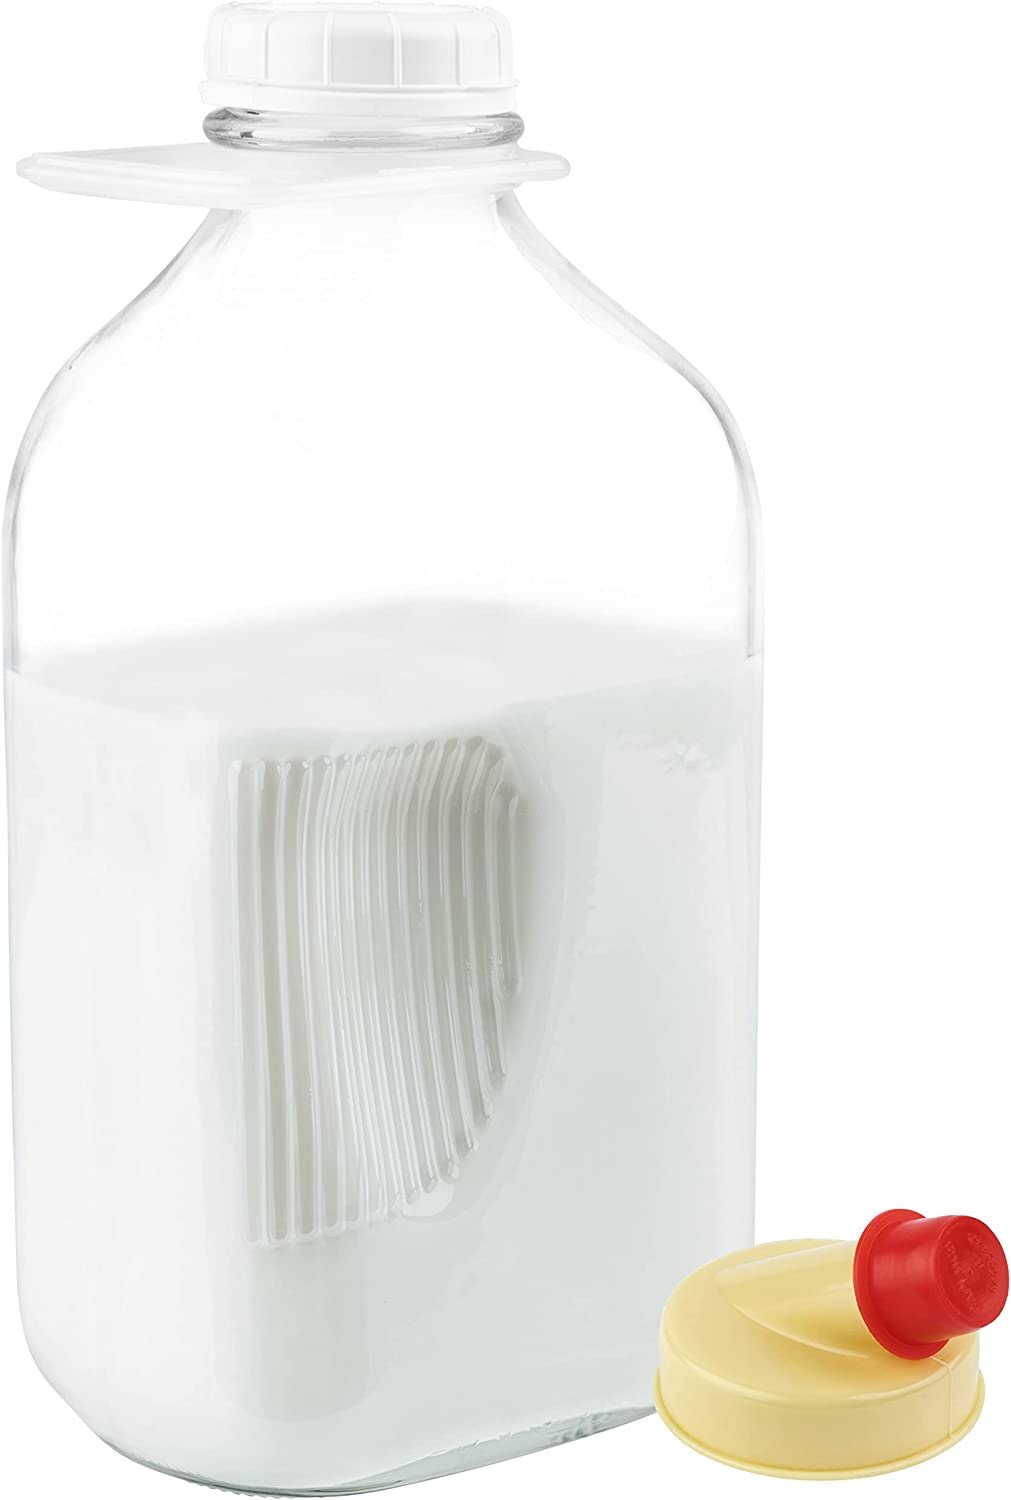 64 Oz Glass Almond Milk Bottle with Lids, Half Gallon Carafe